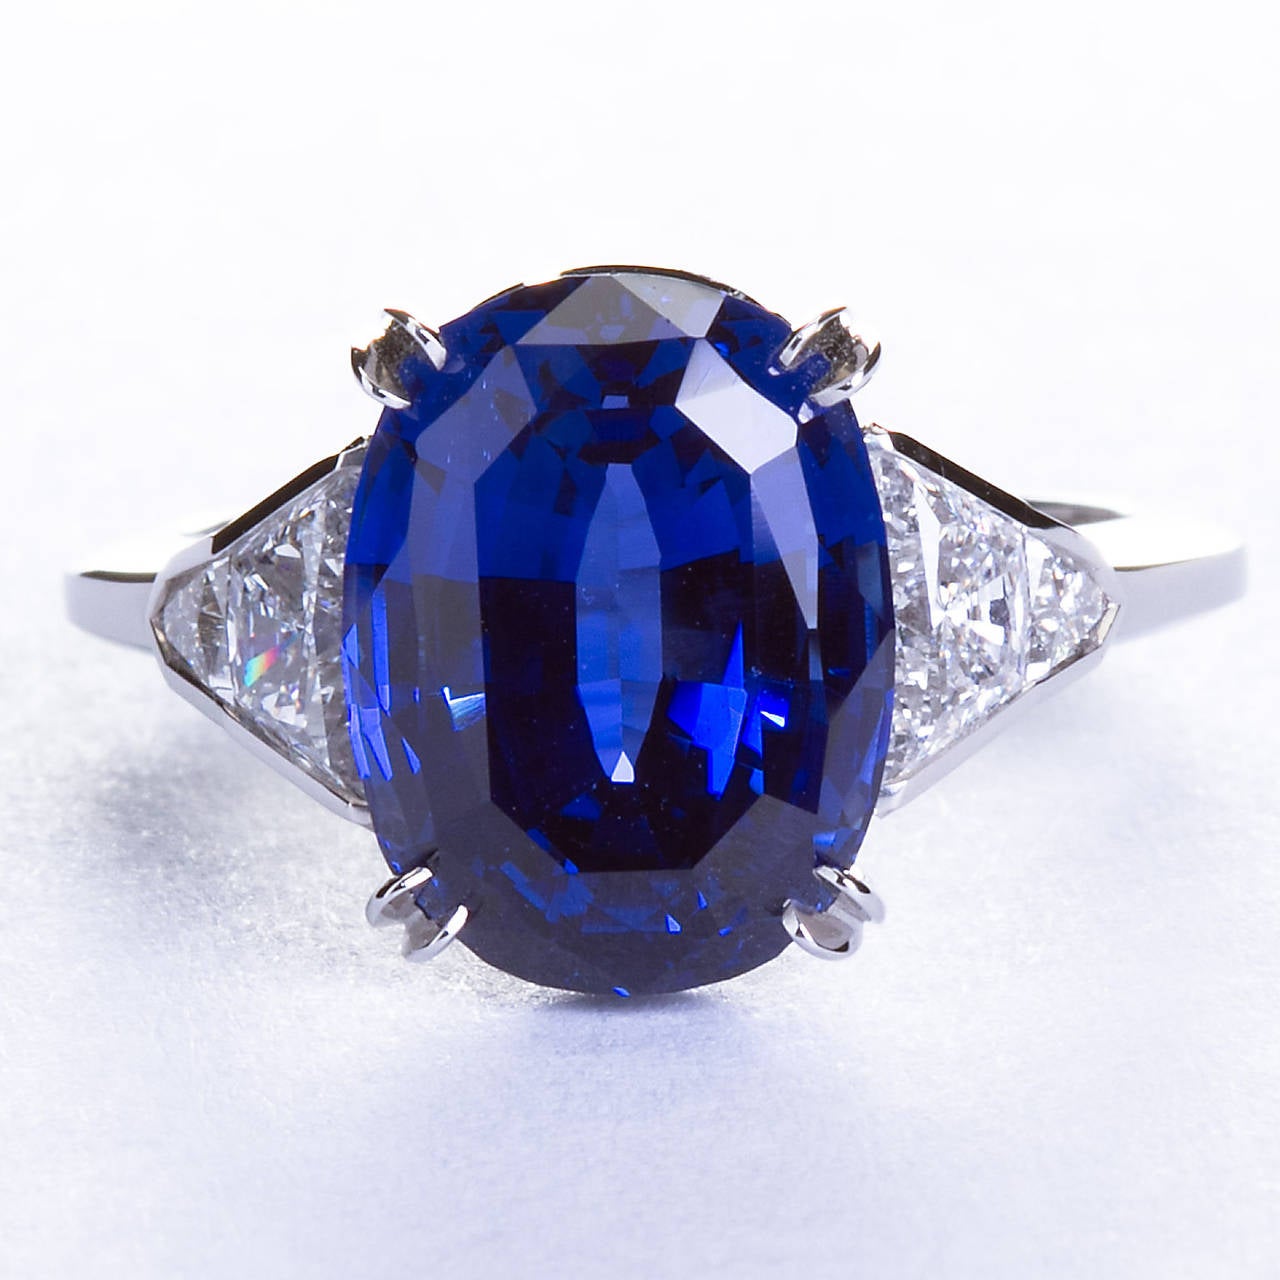 7.49 Carat Oval Burma Sapphire Diamond Platinum Ring For Sale at 1stdibs